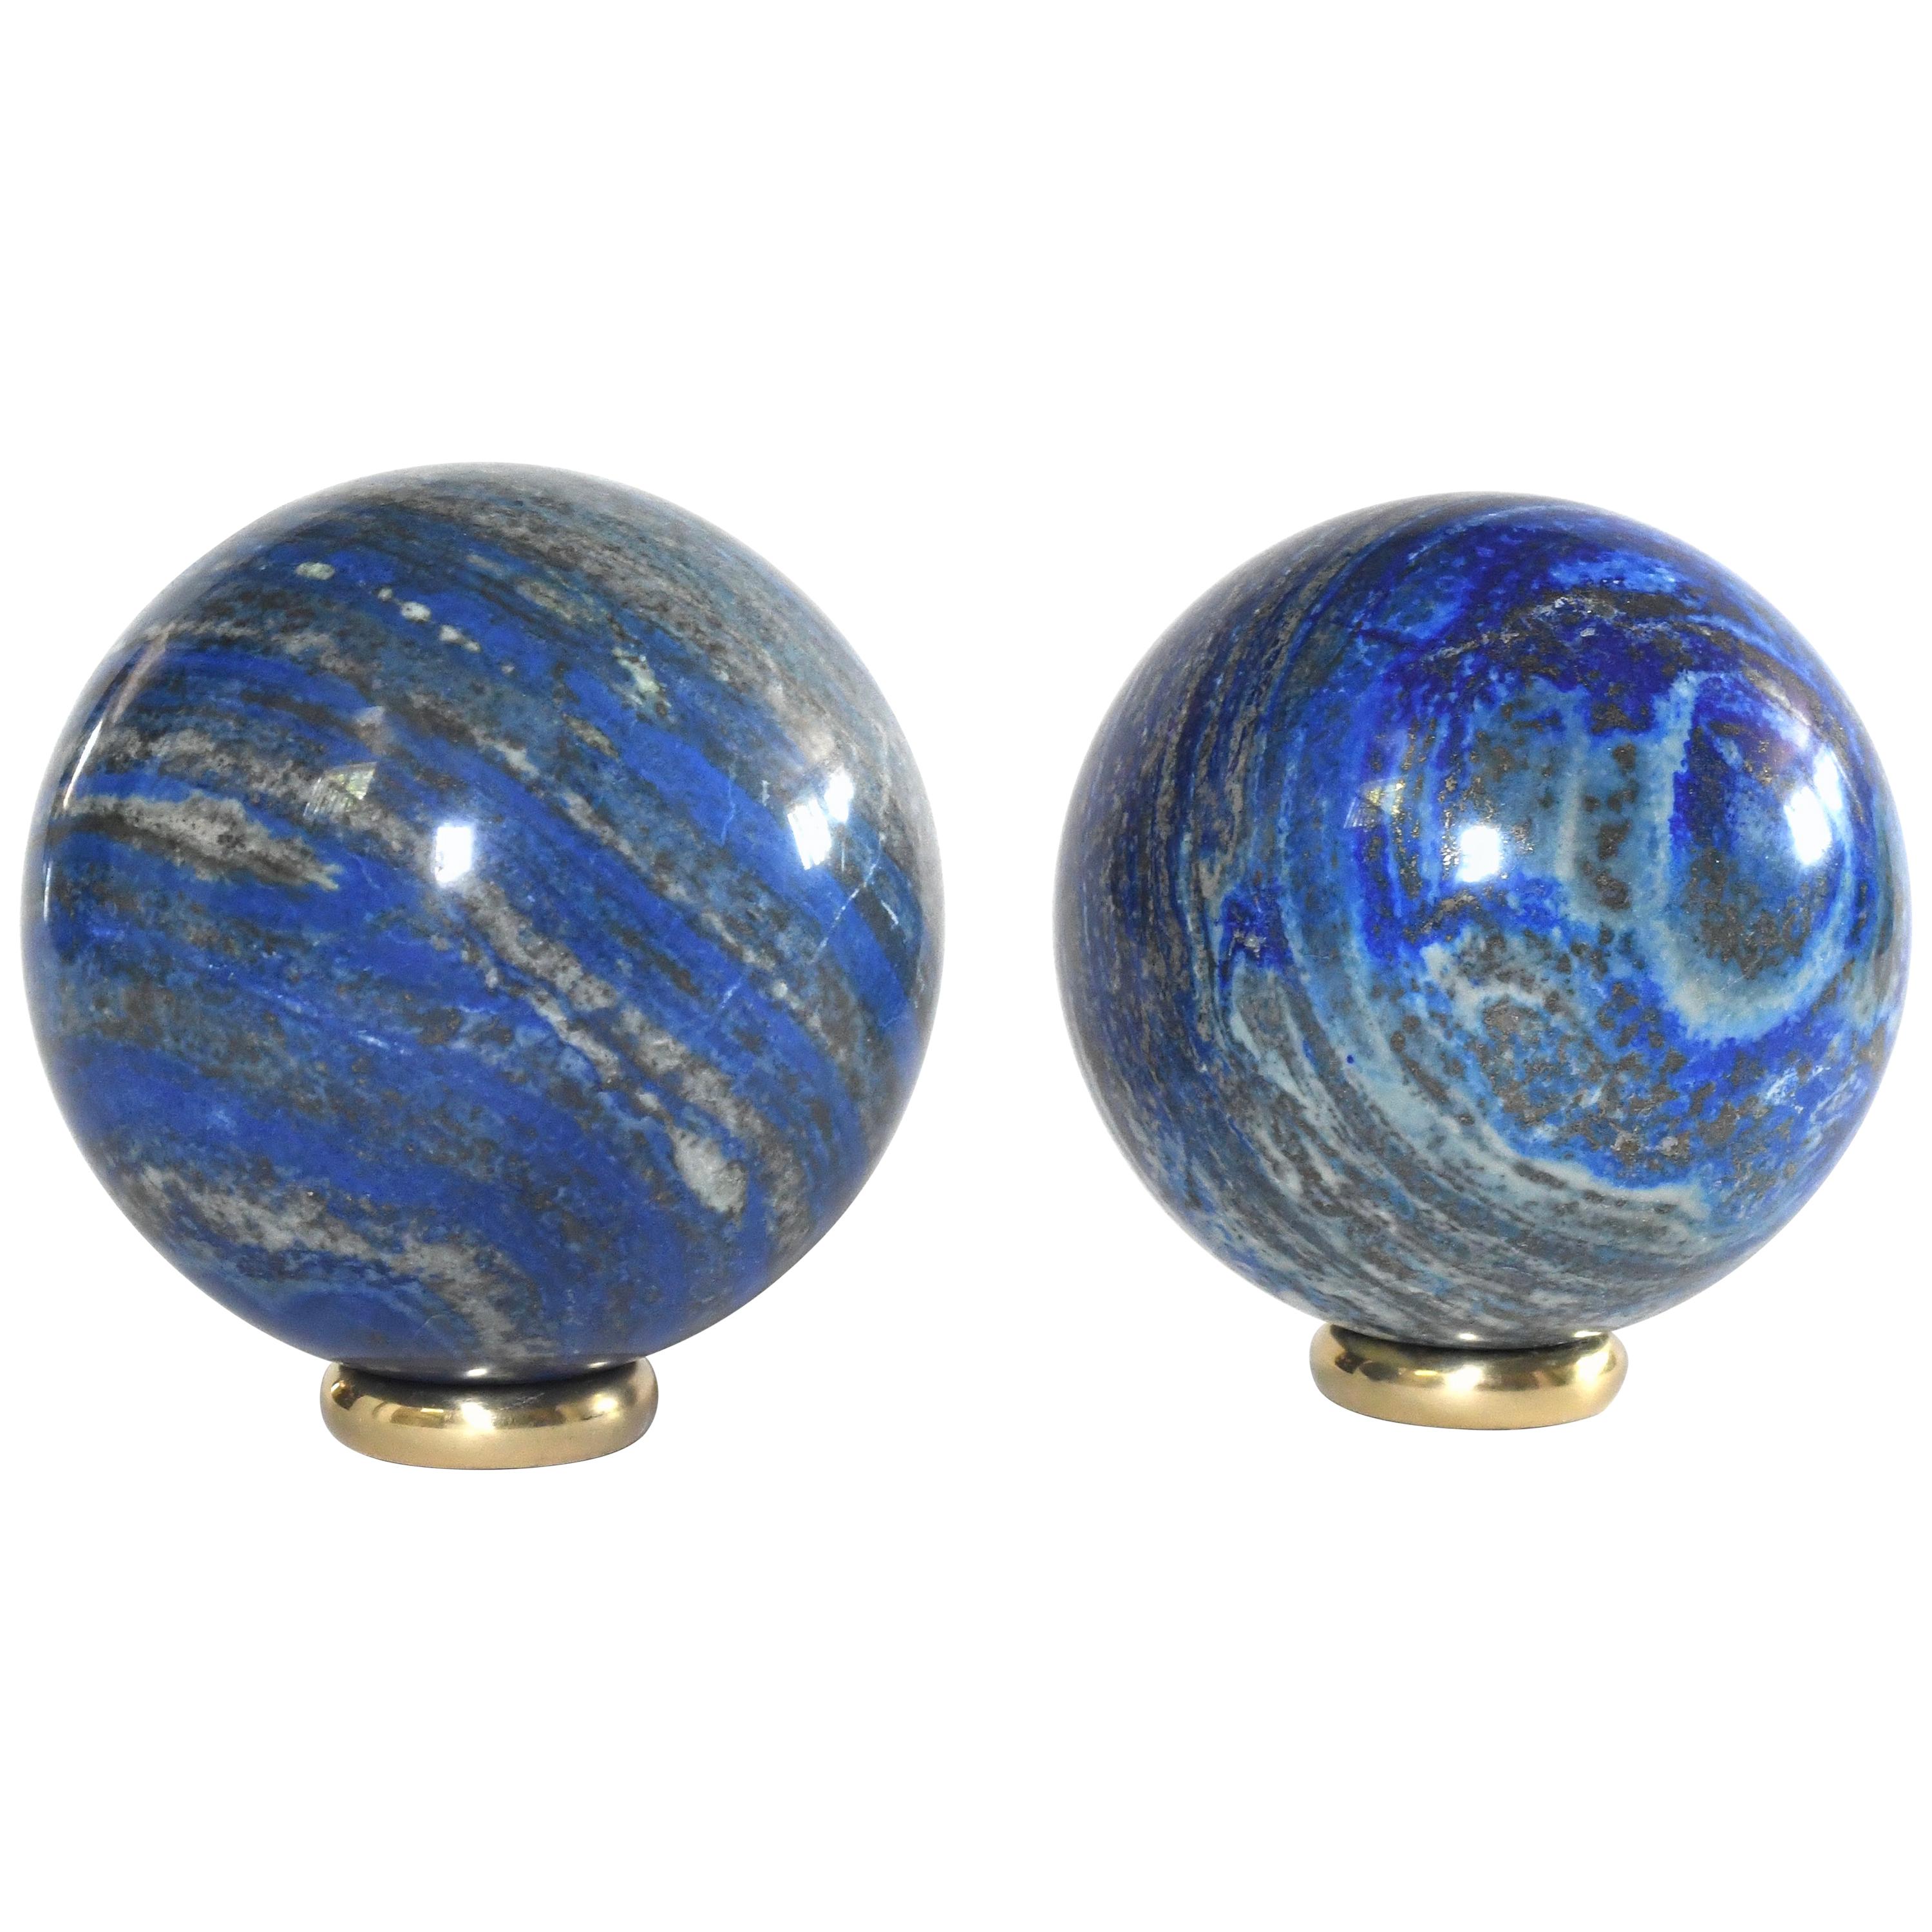 Lapis Lazuli Balls